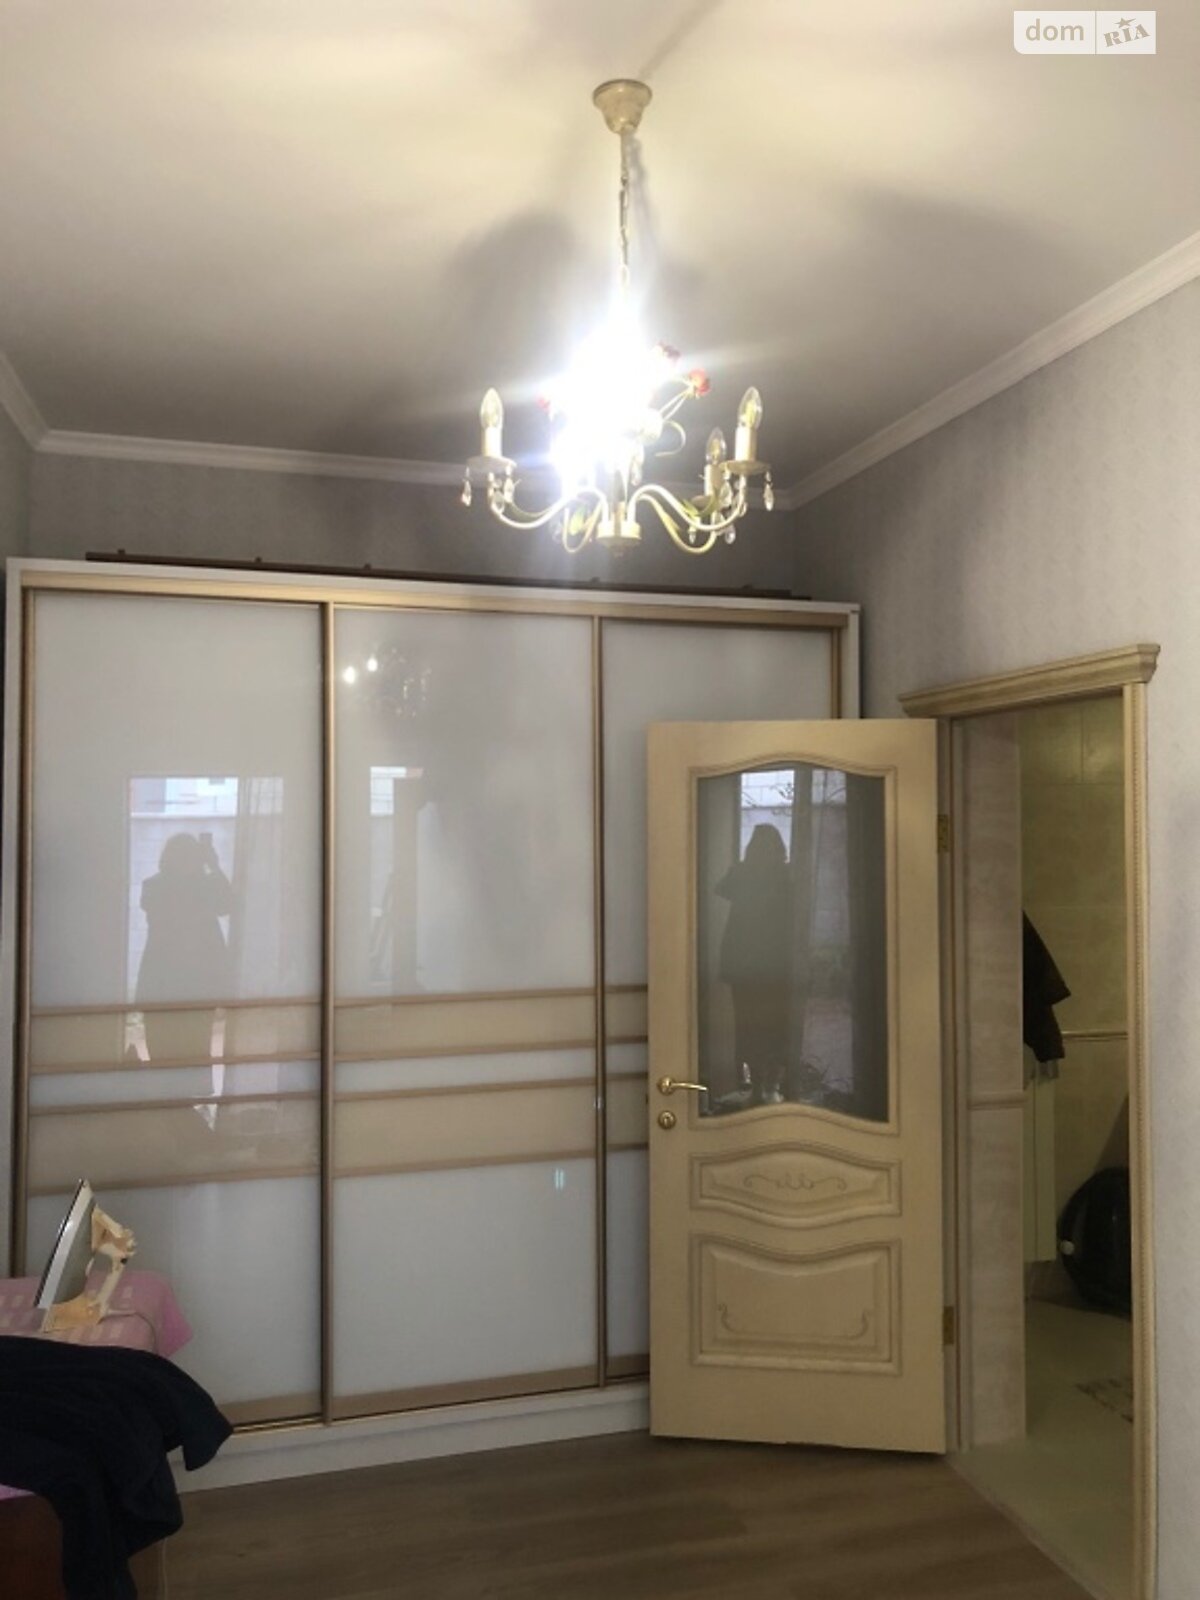 Продажа части дома в Одессе, улица Костанди, район Киевский, 1 комната фото 1